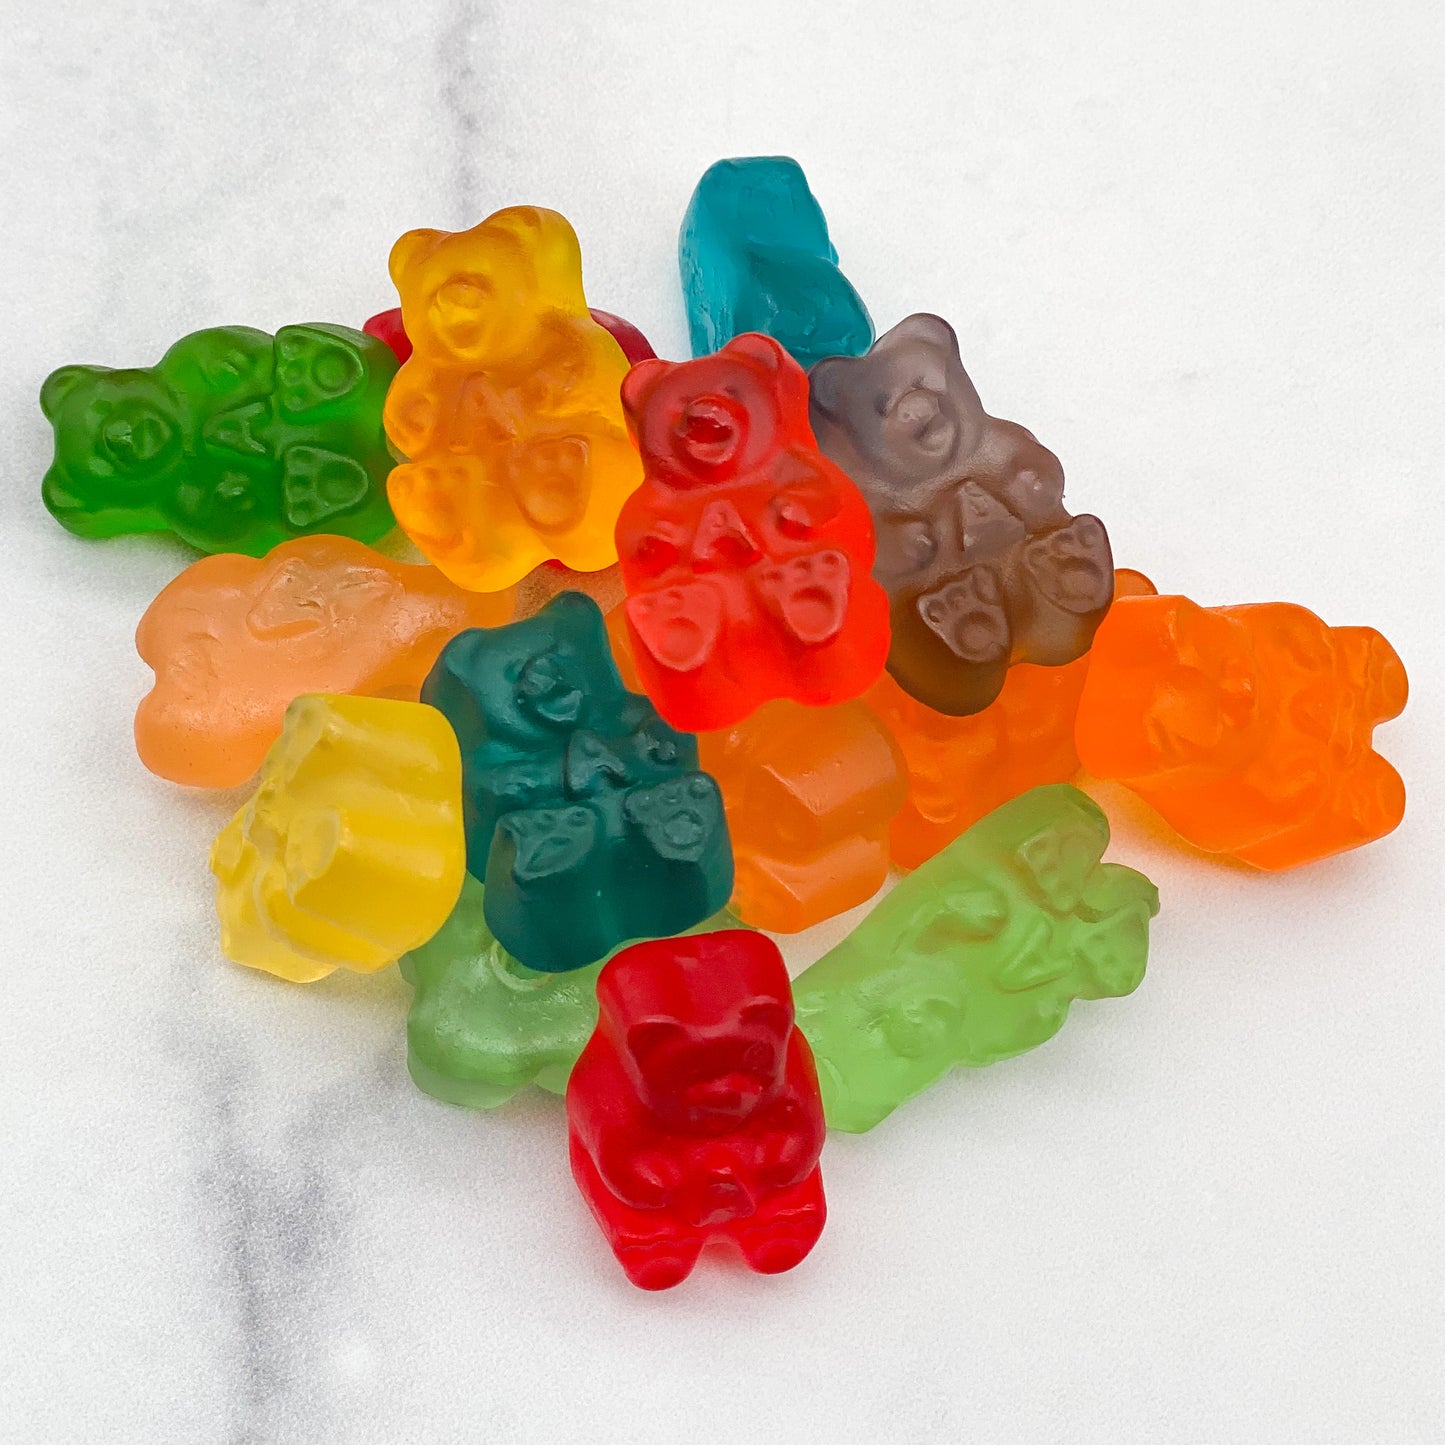 Gummi Bears - 12 Flavor